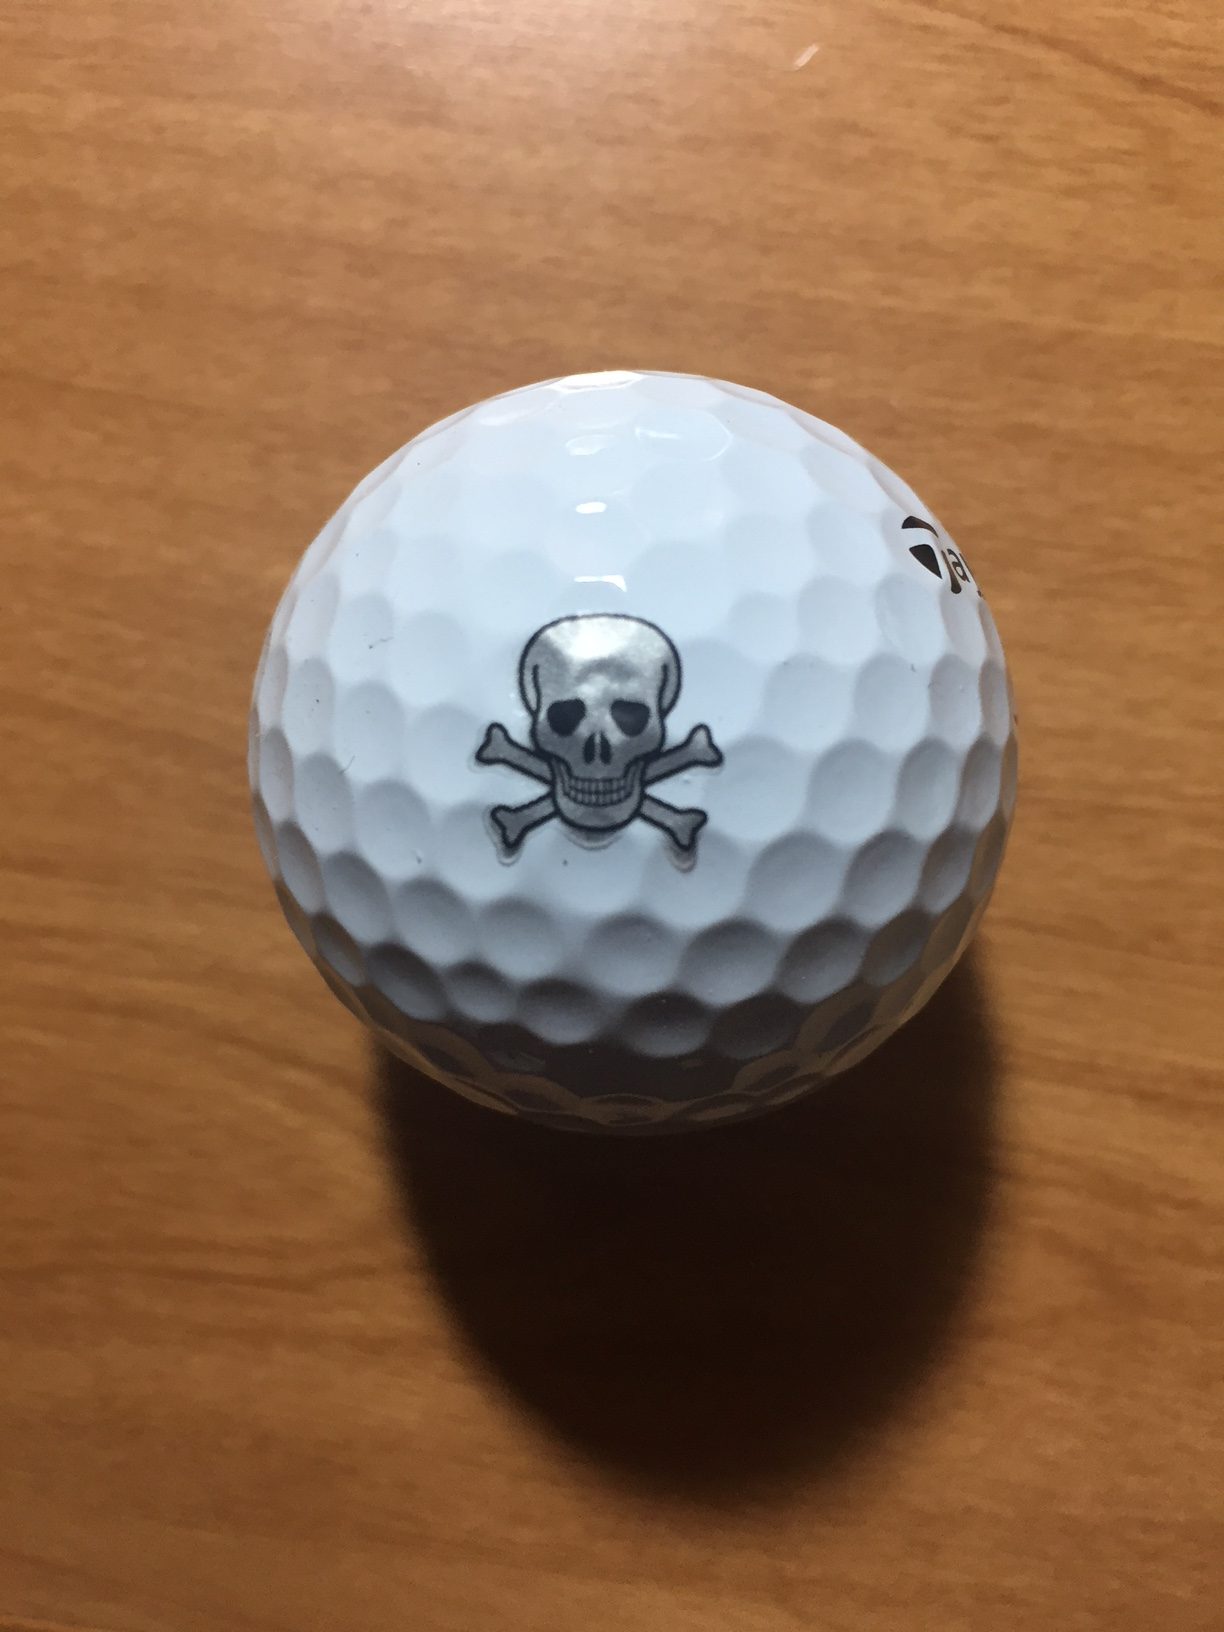 How do you mark your golf balls? – Niche Golf